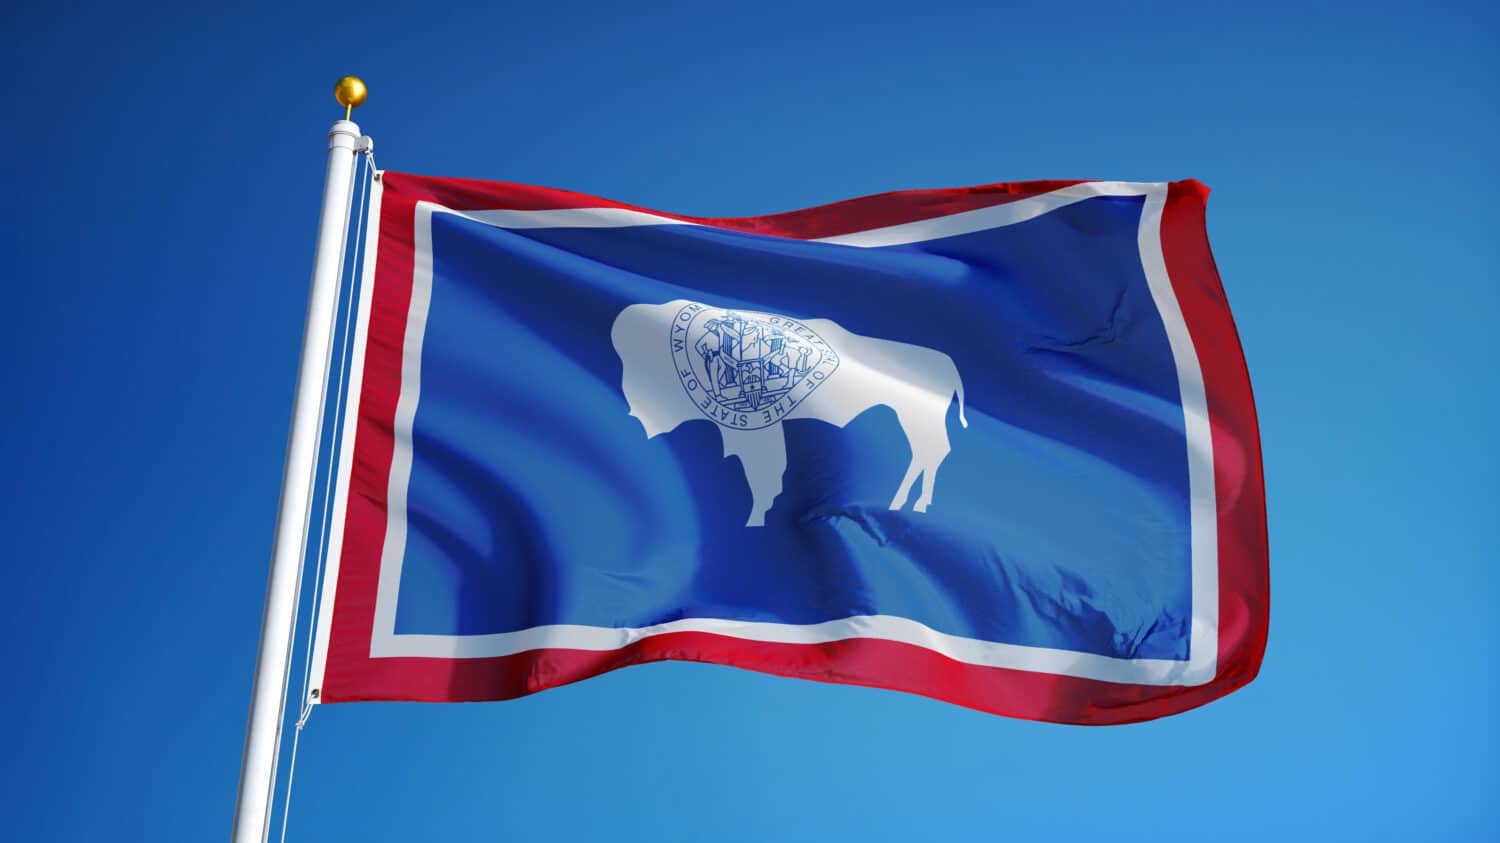 Wyoming (U.S. state) flag waving against clear blue sky